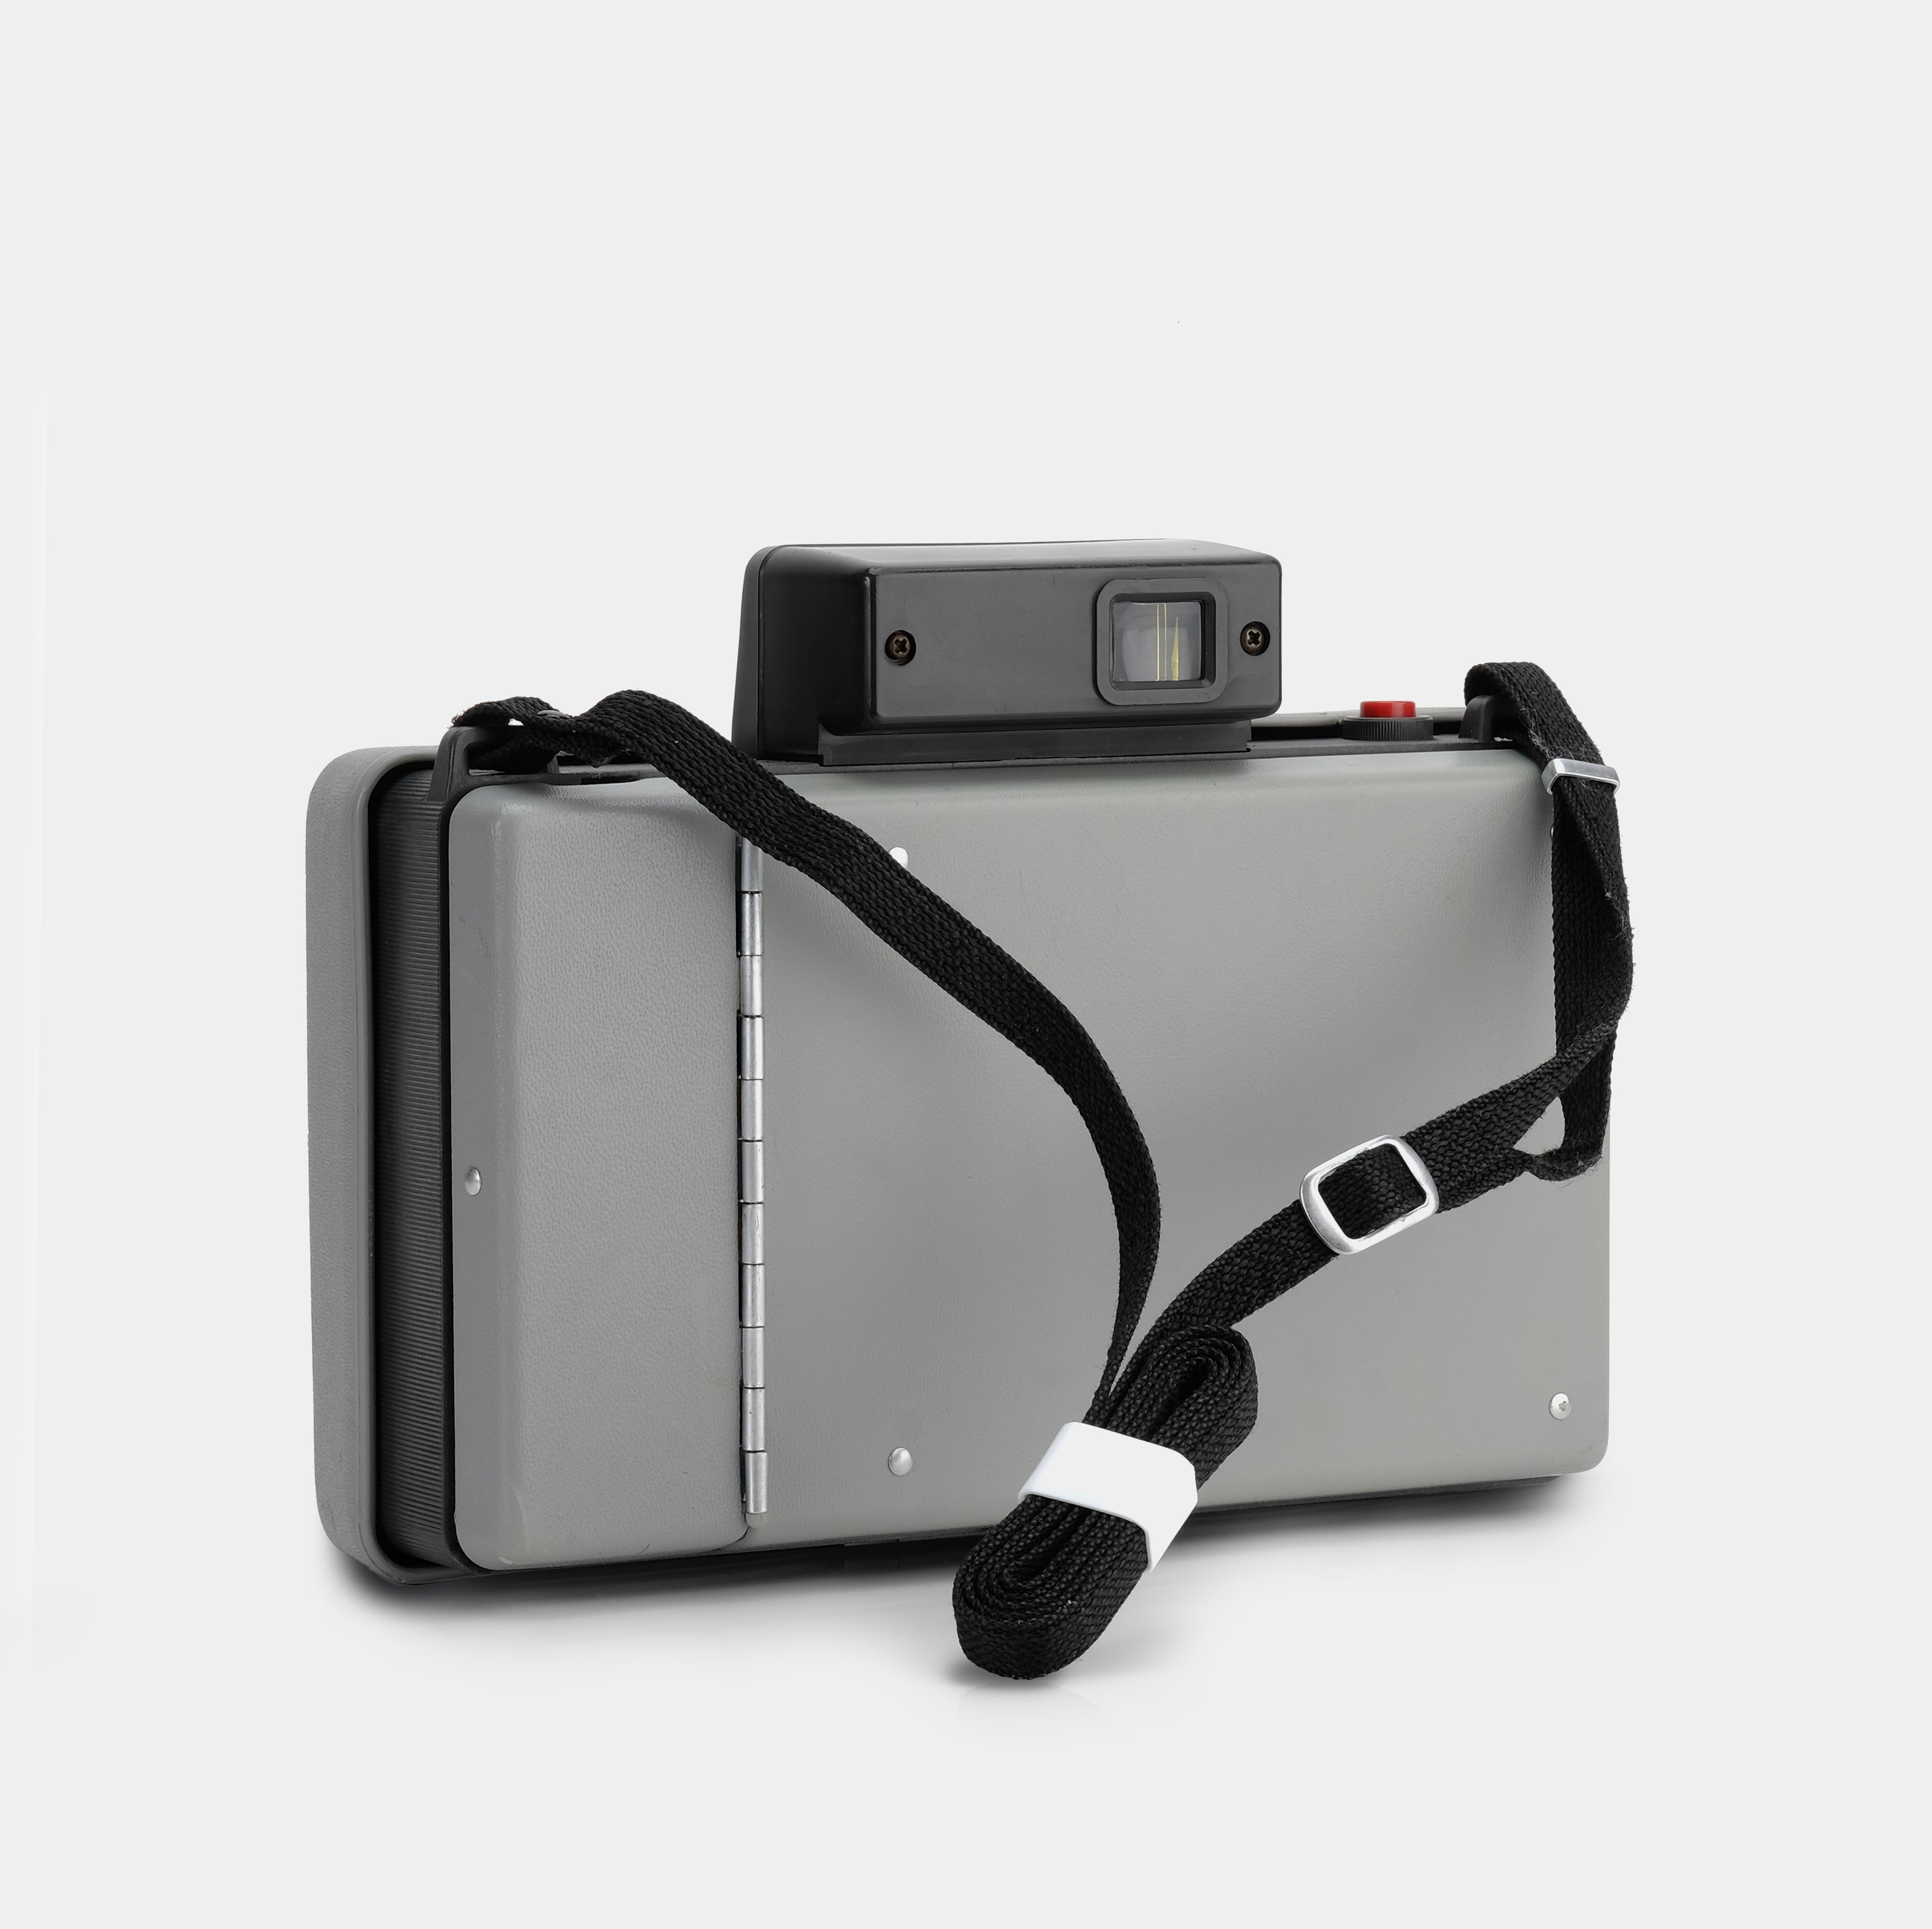 Polaroid Model 104 Packfilm Land Camera